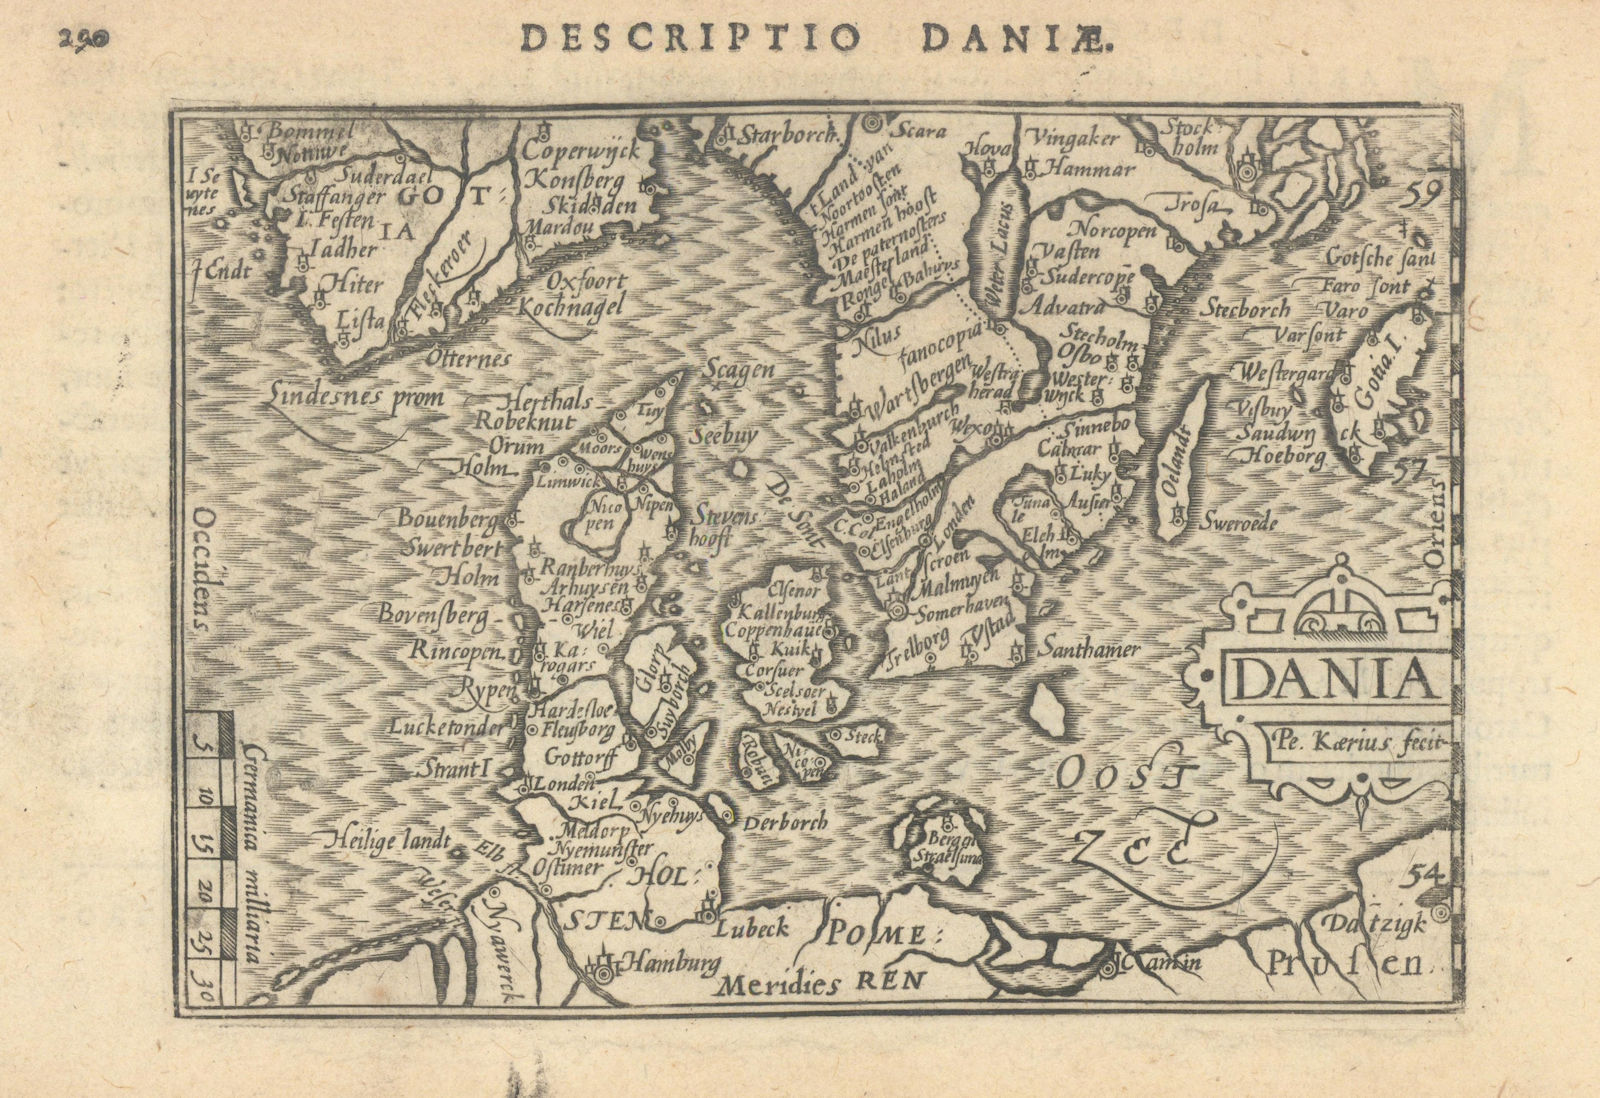 Daniae / Dania by Bertius / Langenes. Denmark, southern Norway & Sweden 1603 map